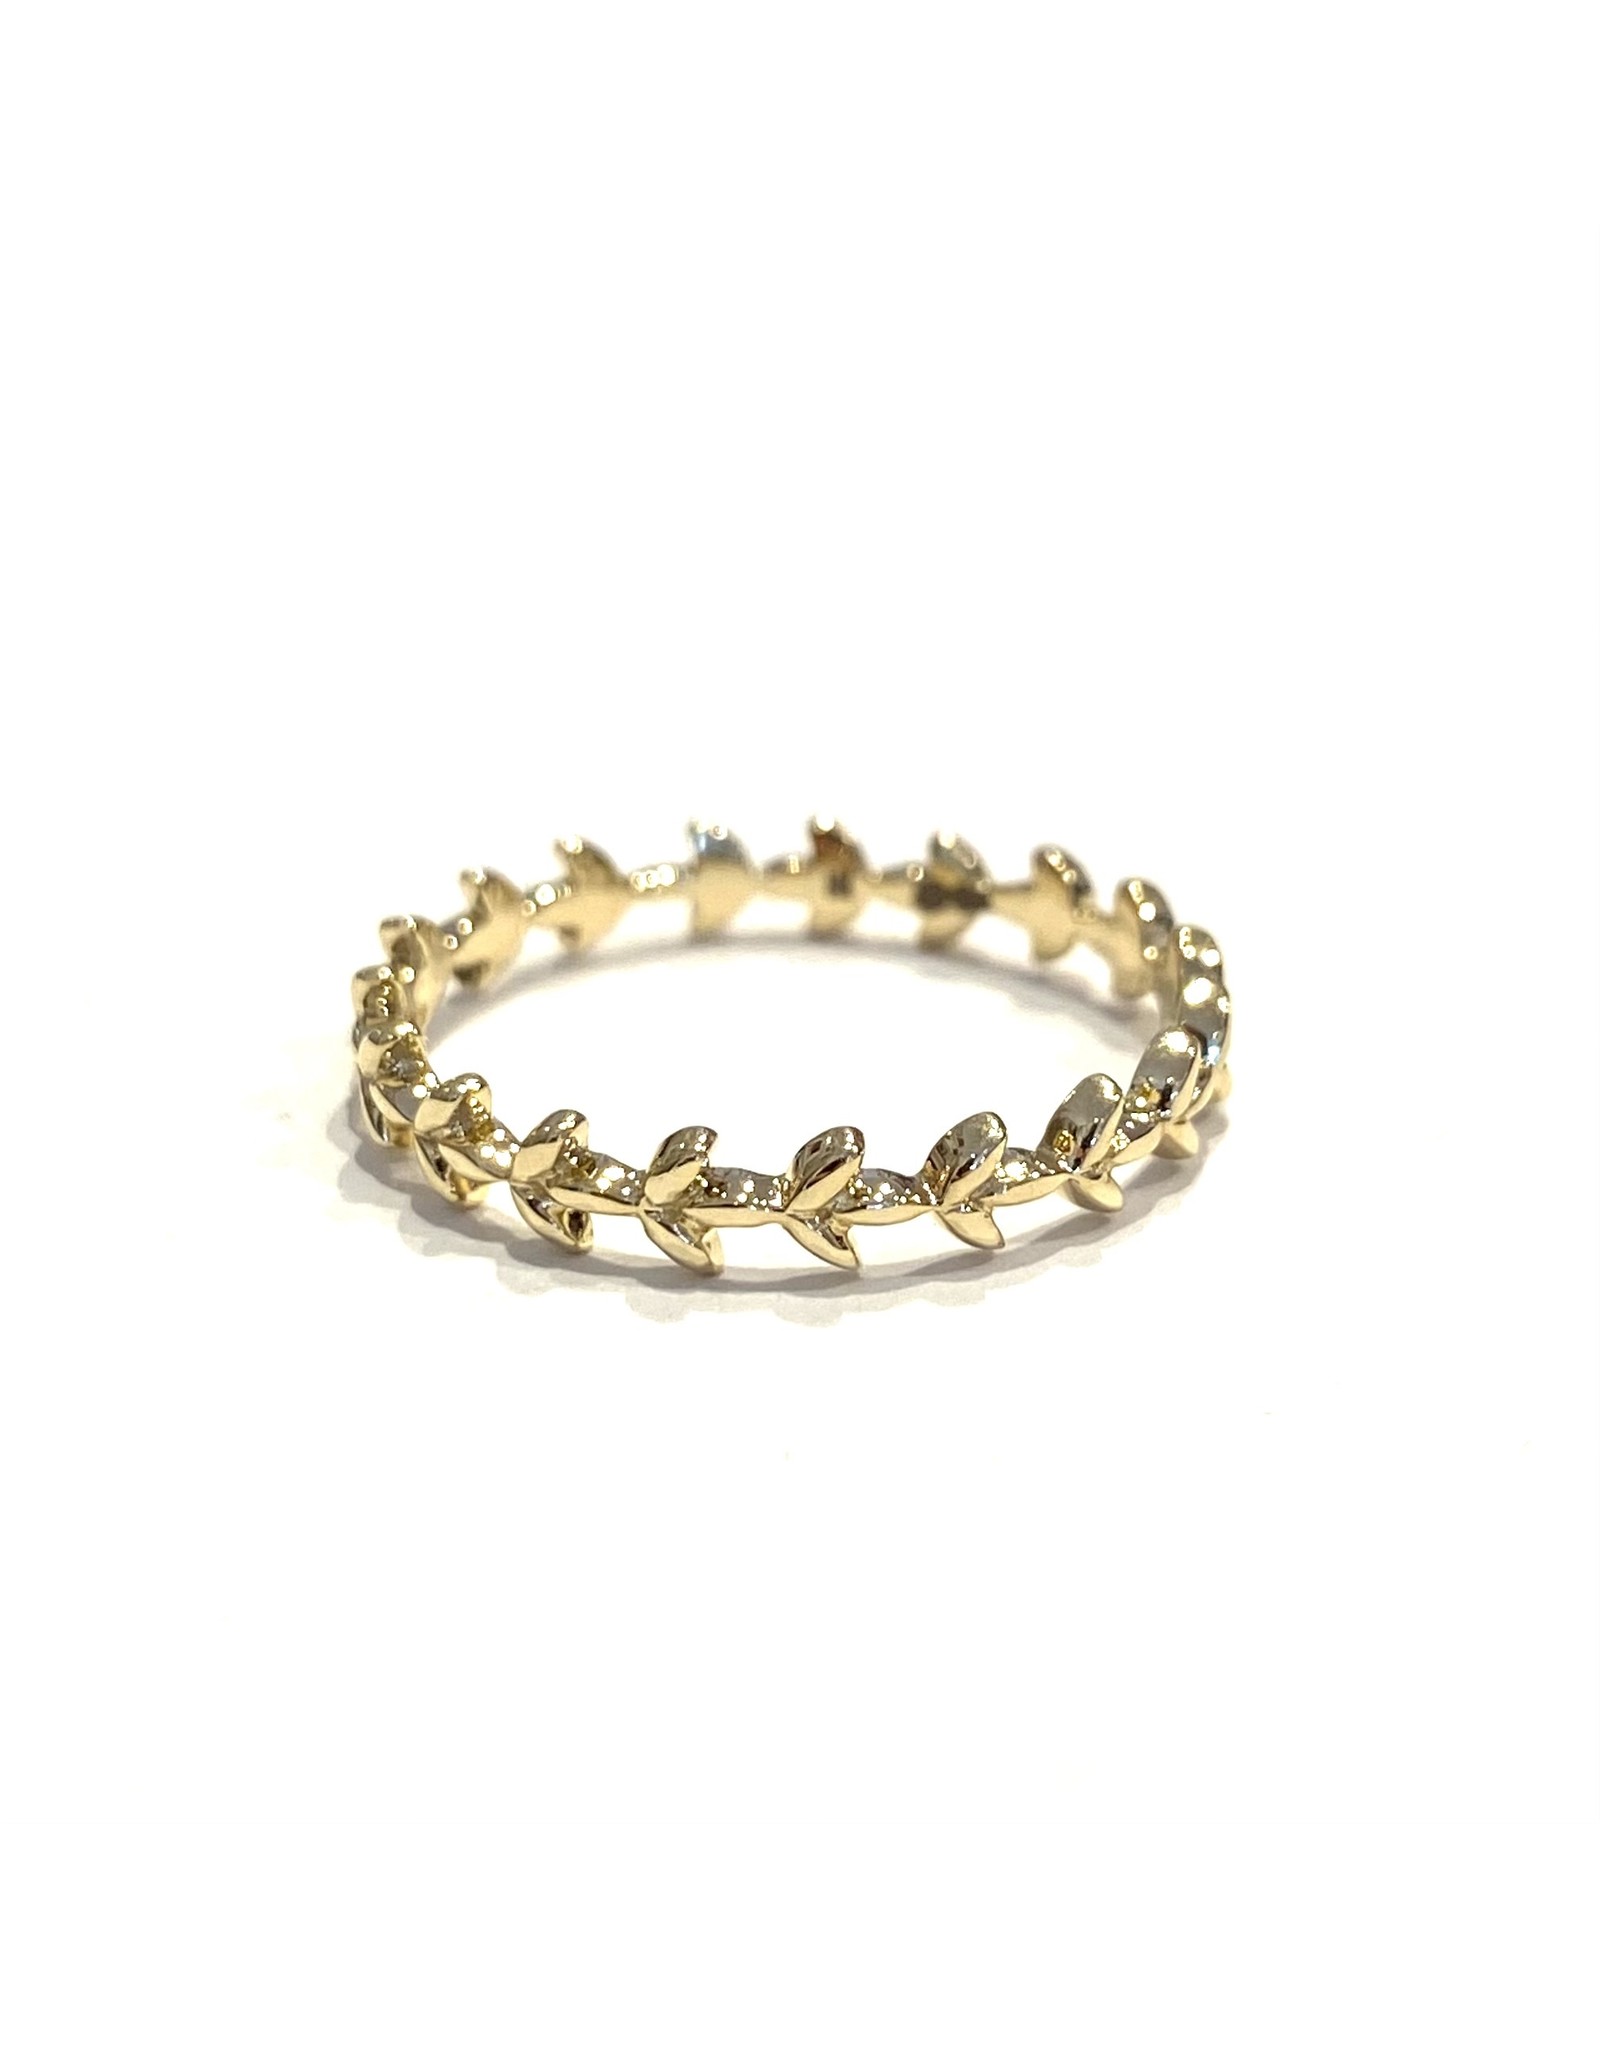 Bo Gold Ring - Gold - Wreath